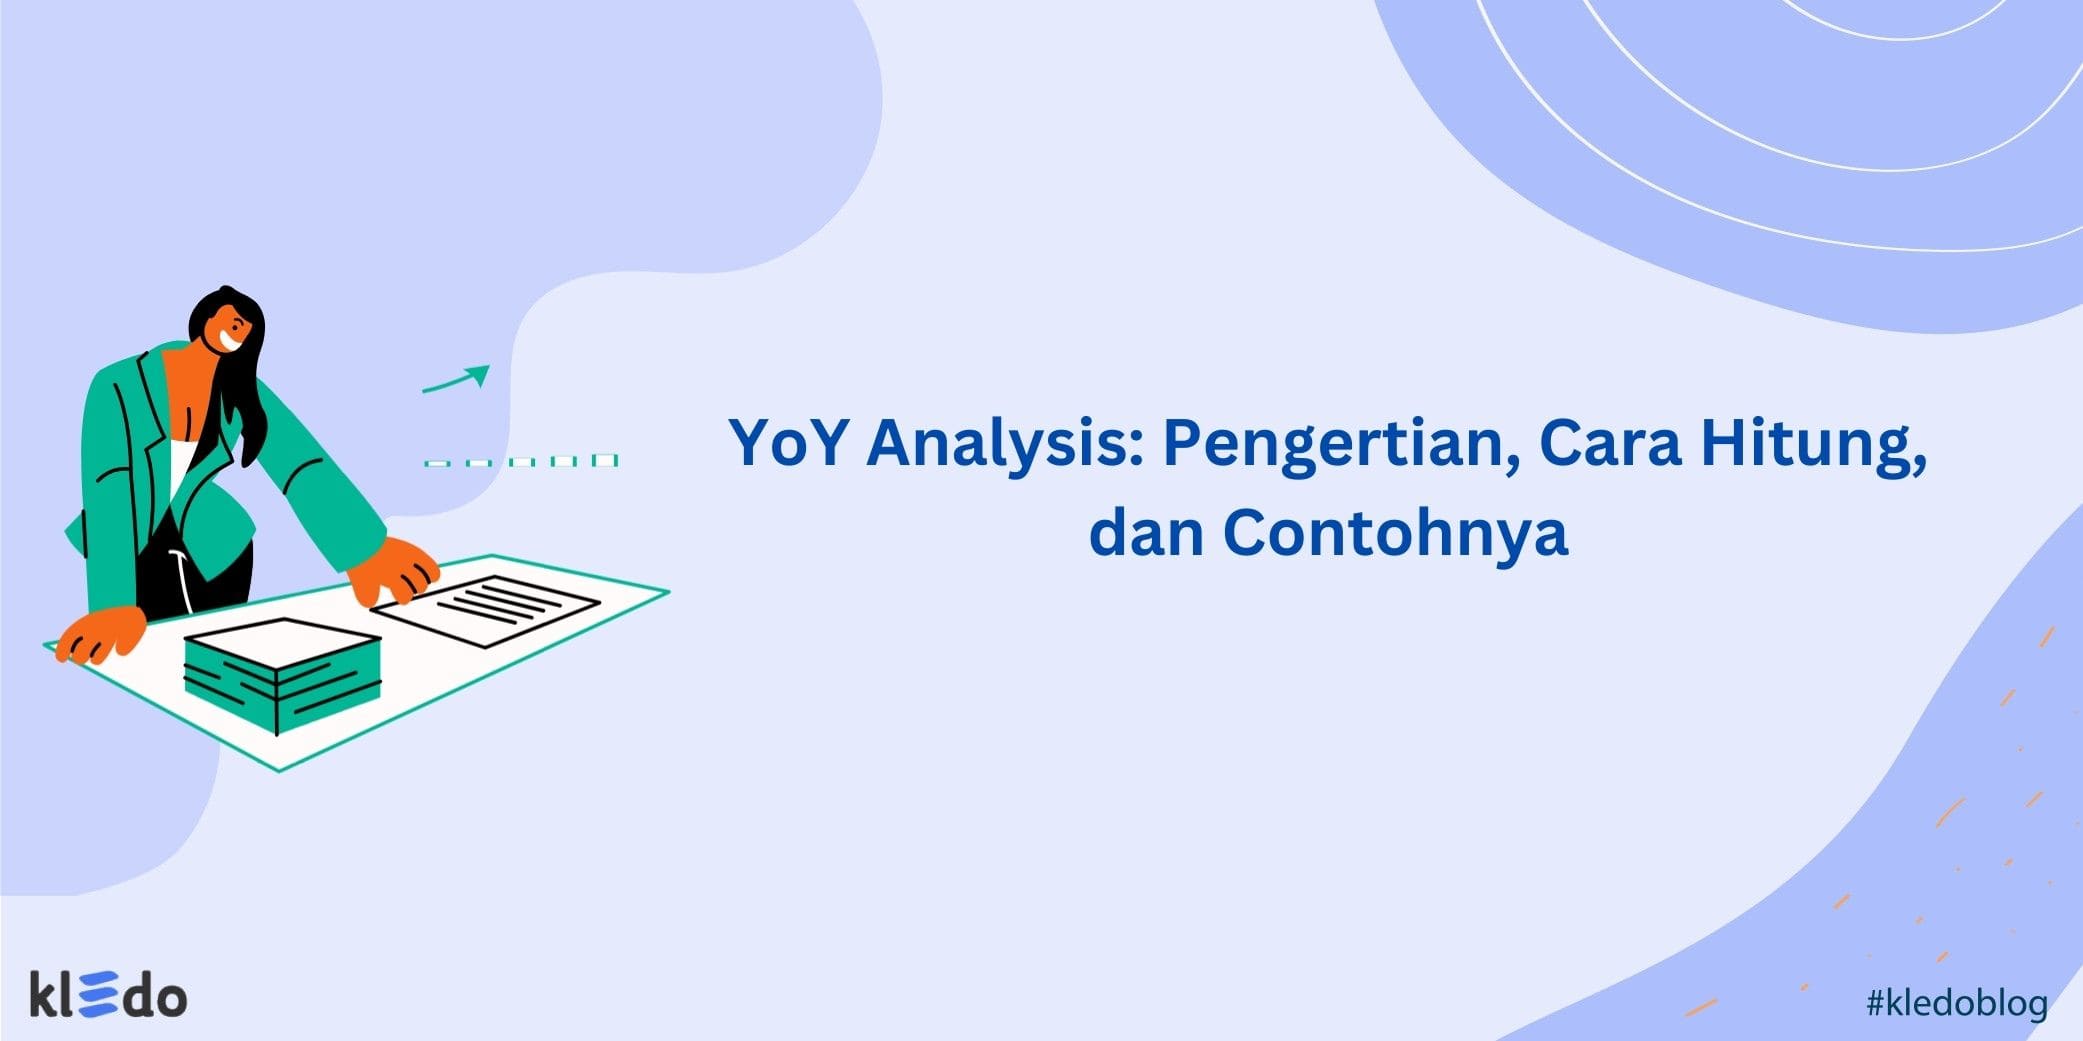 yoy analysis banner